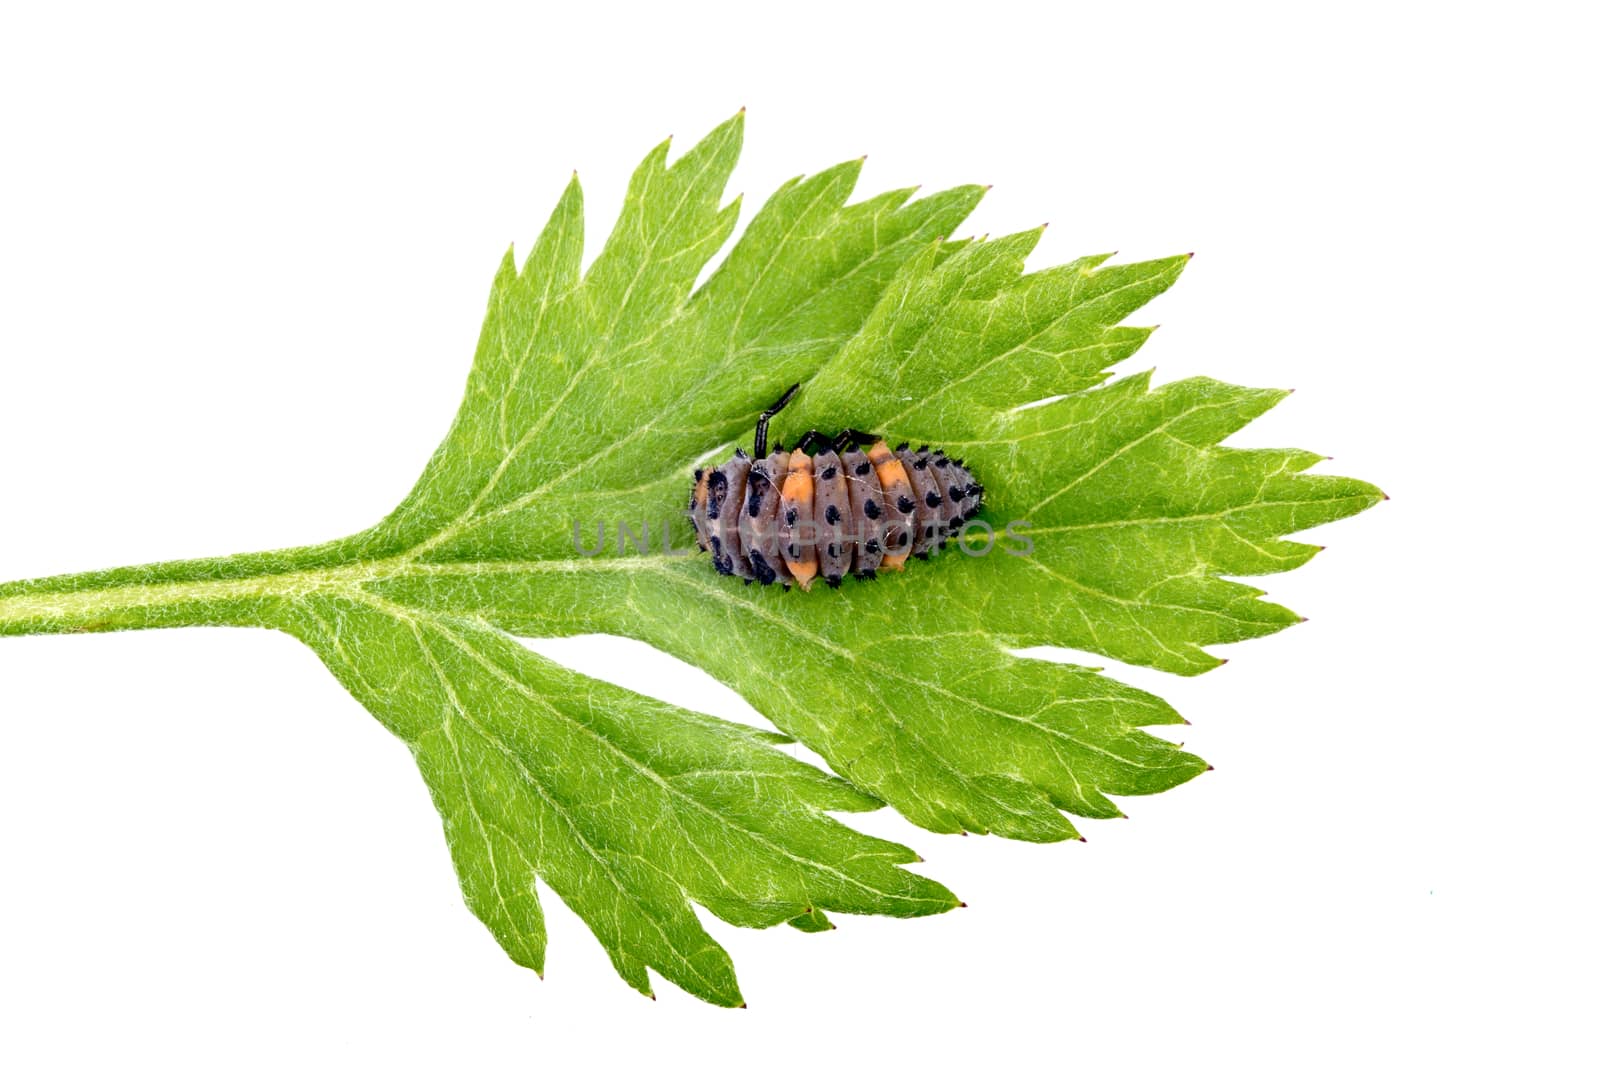 Ladybird larva on green leaf isolated on white background